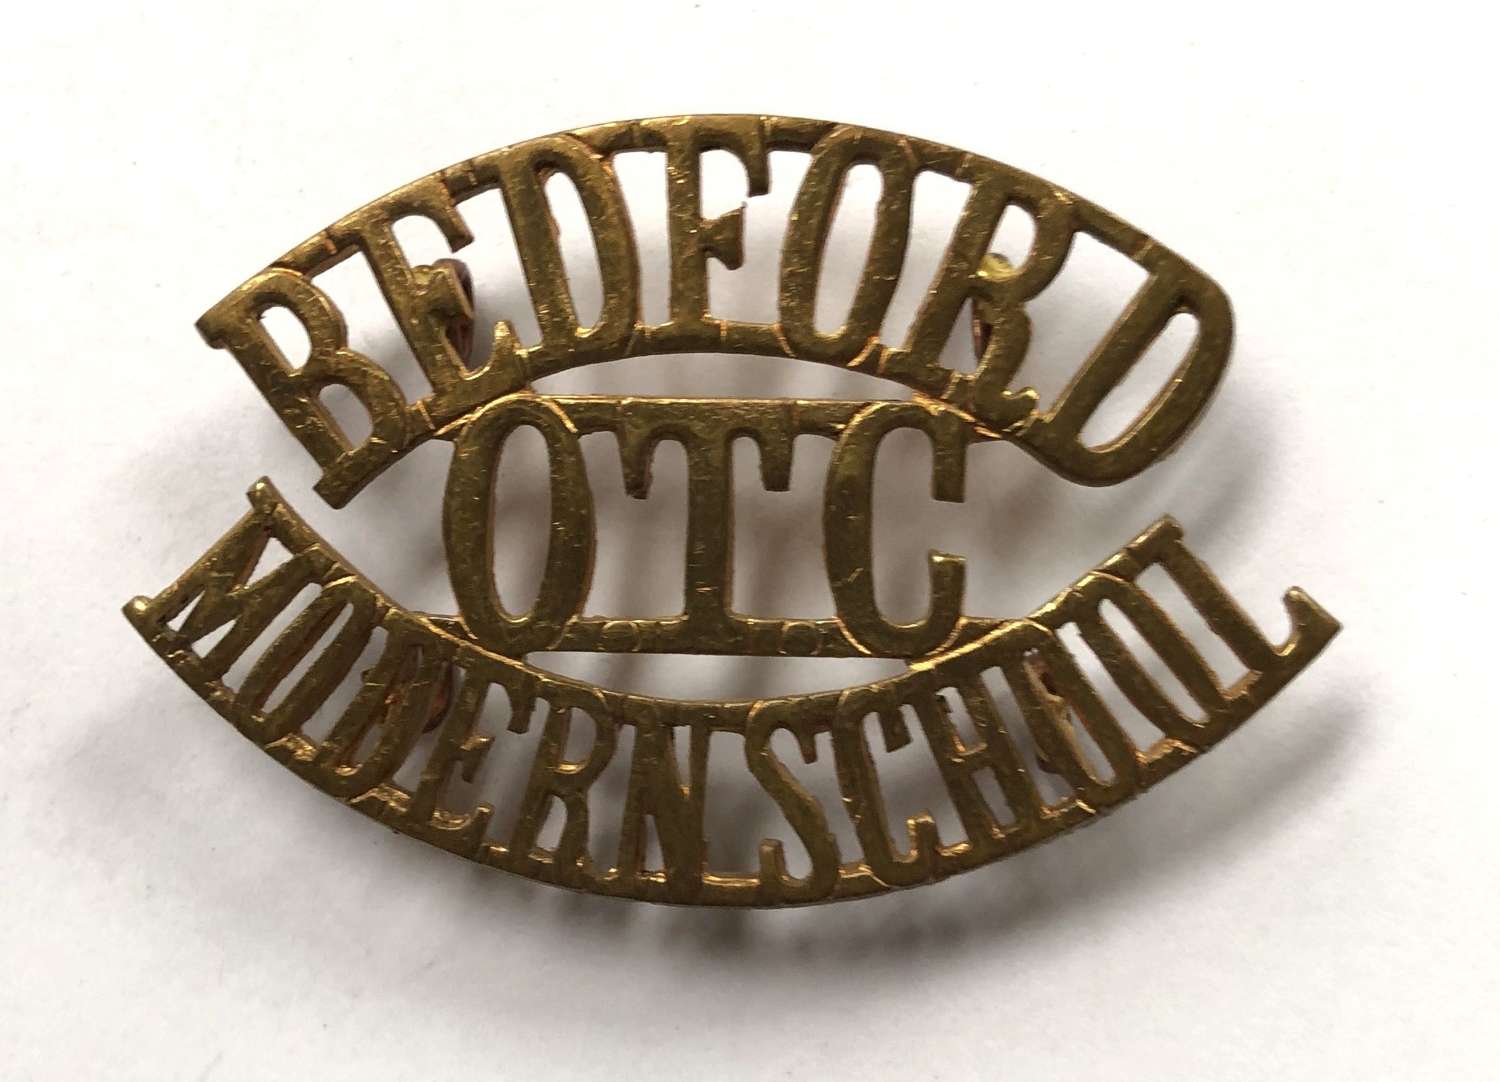 BEDFORD / OTC / MODERN SCHOOL shoulder title